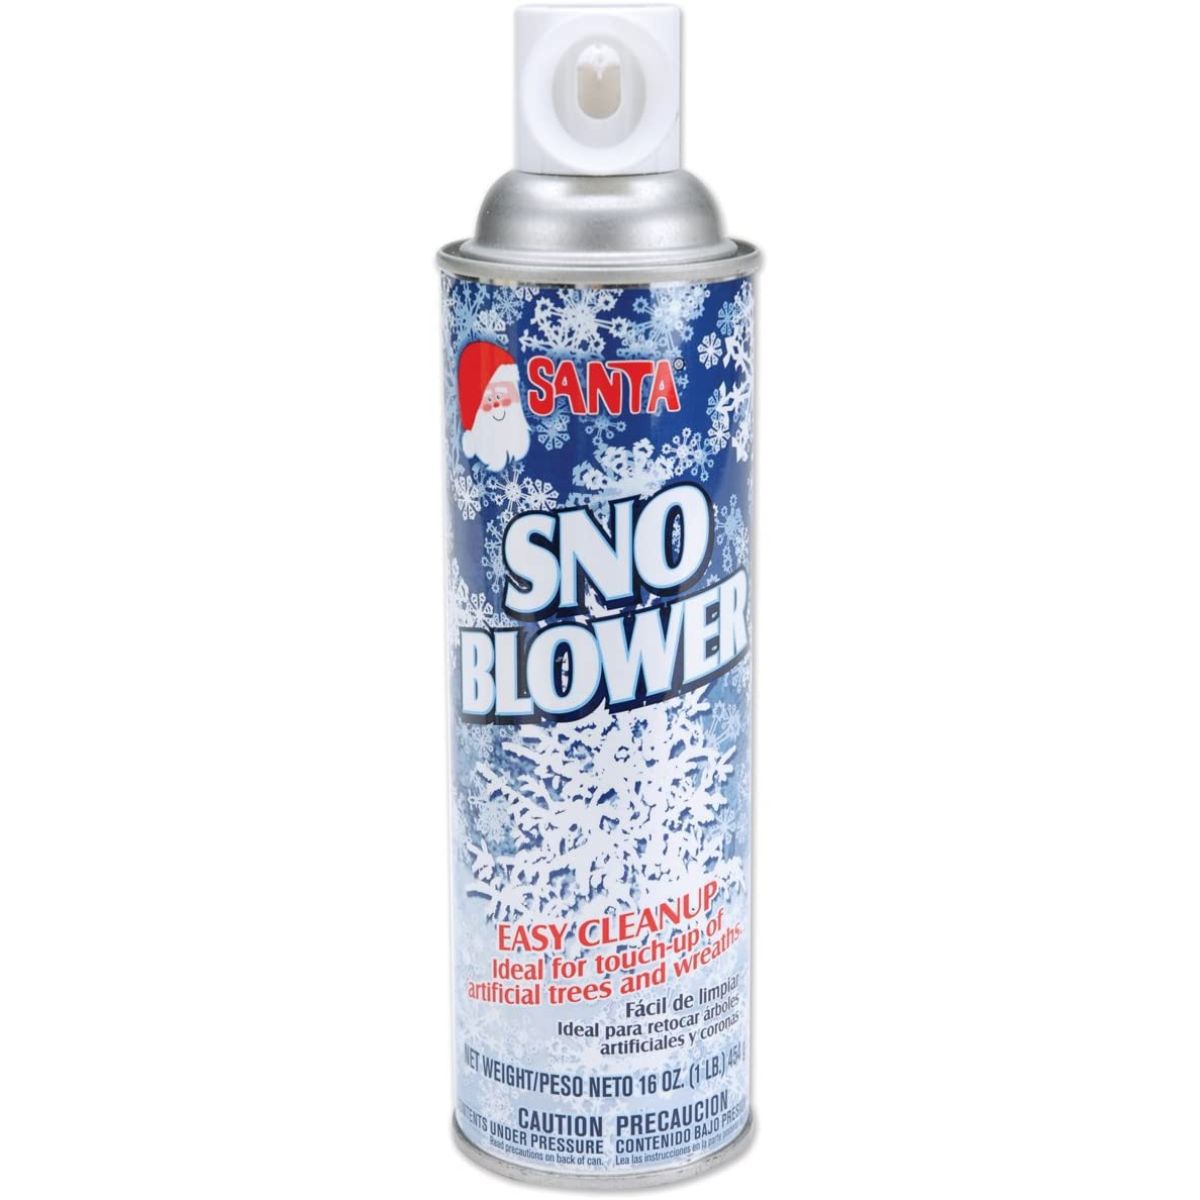 Wonderland Snow Spray - 9oz – Bleeding Art Industries